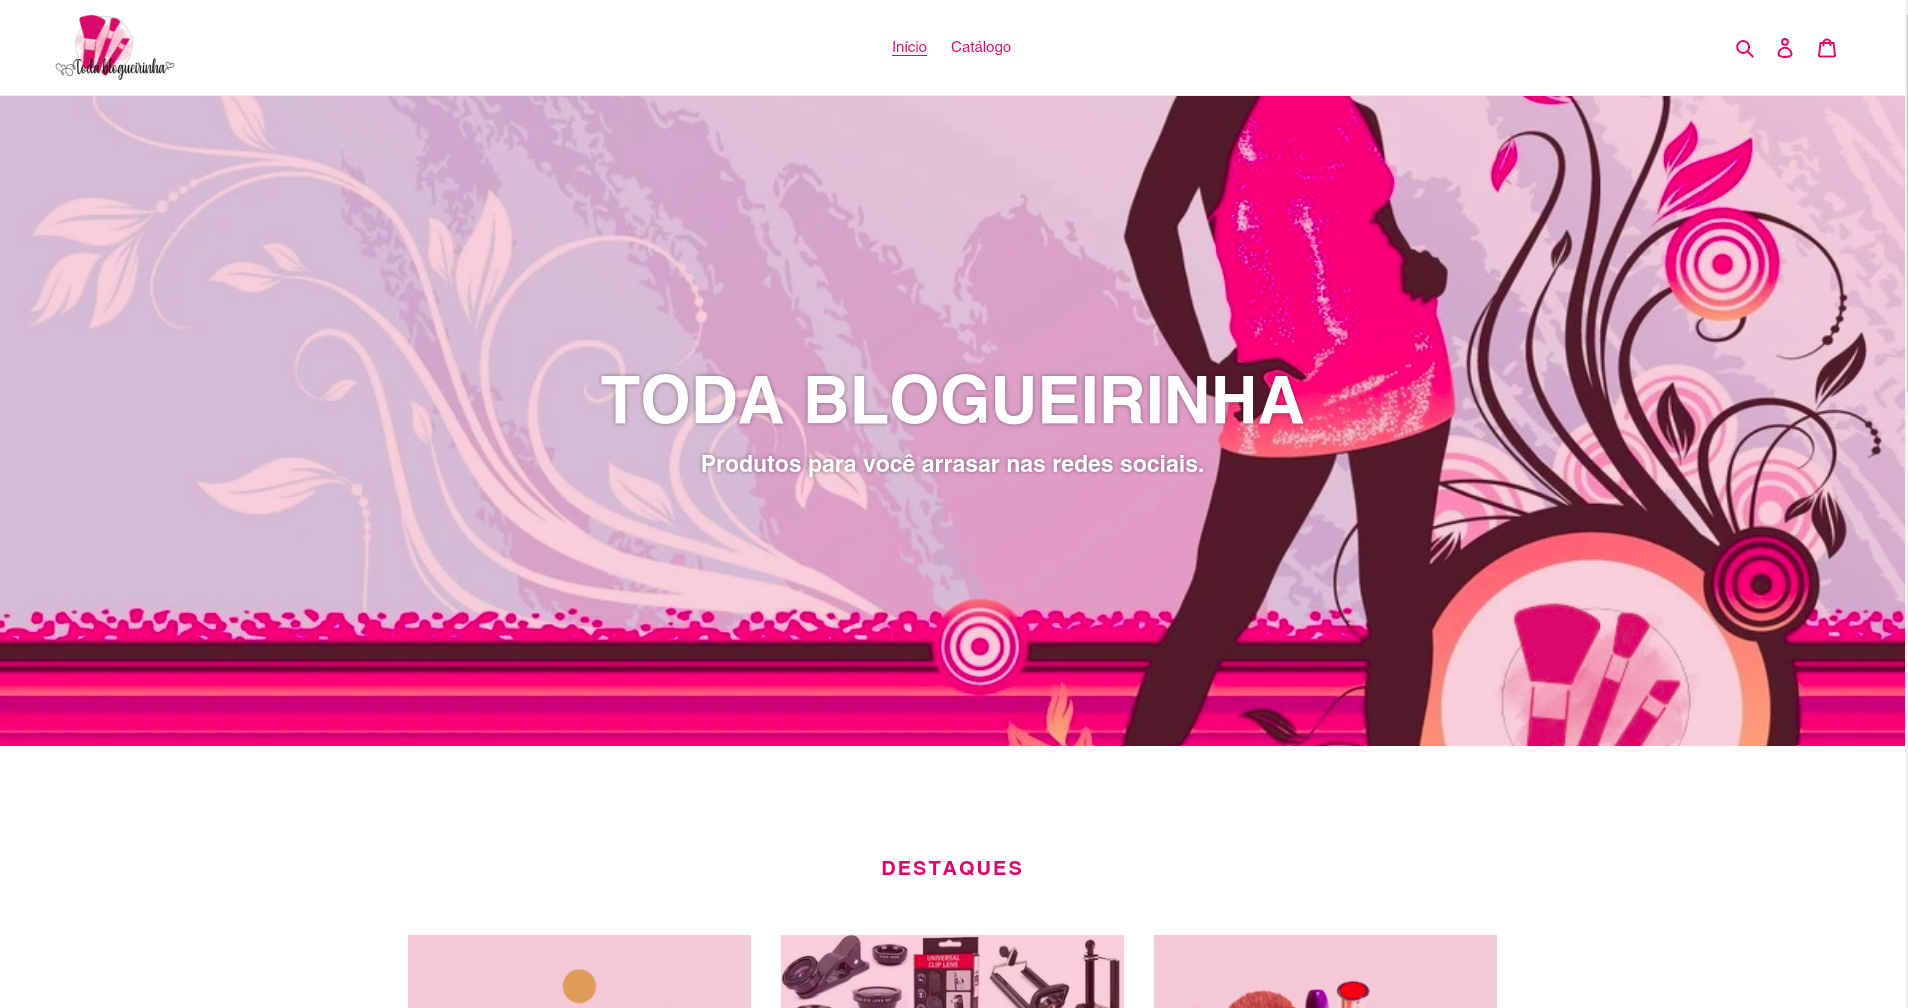 Woocommerce layout_todablogueirinha